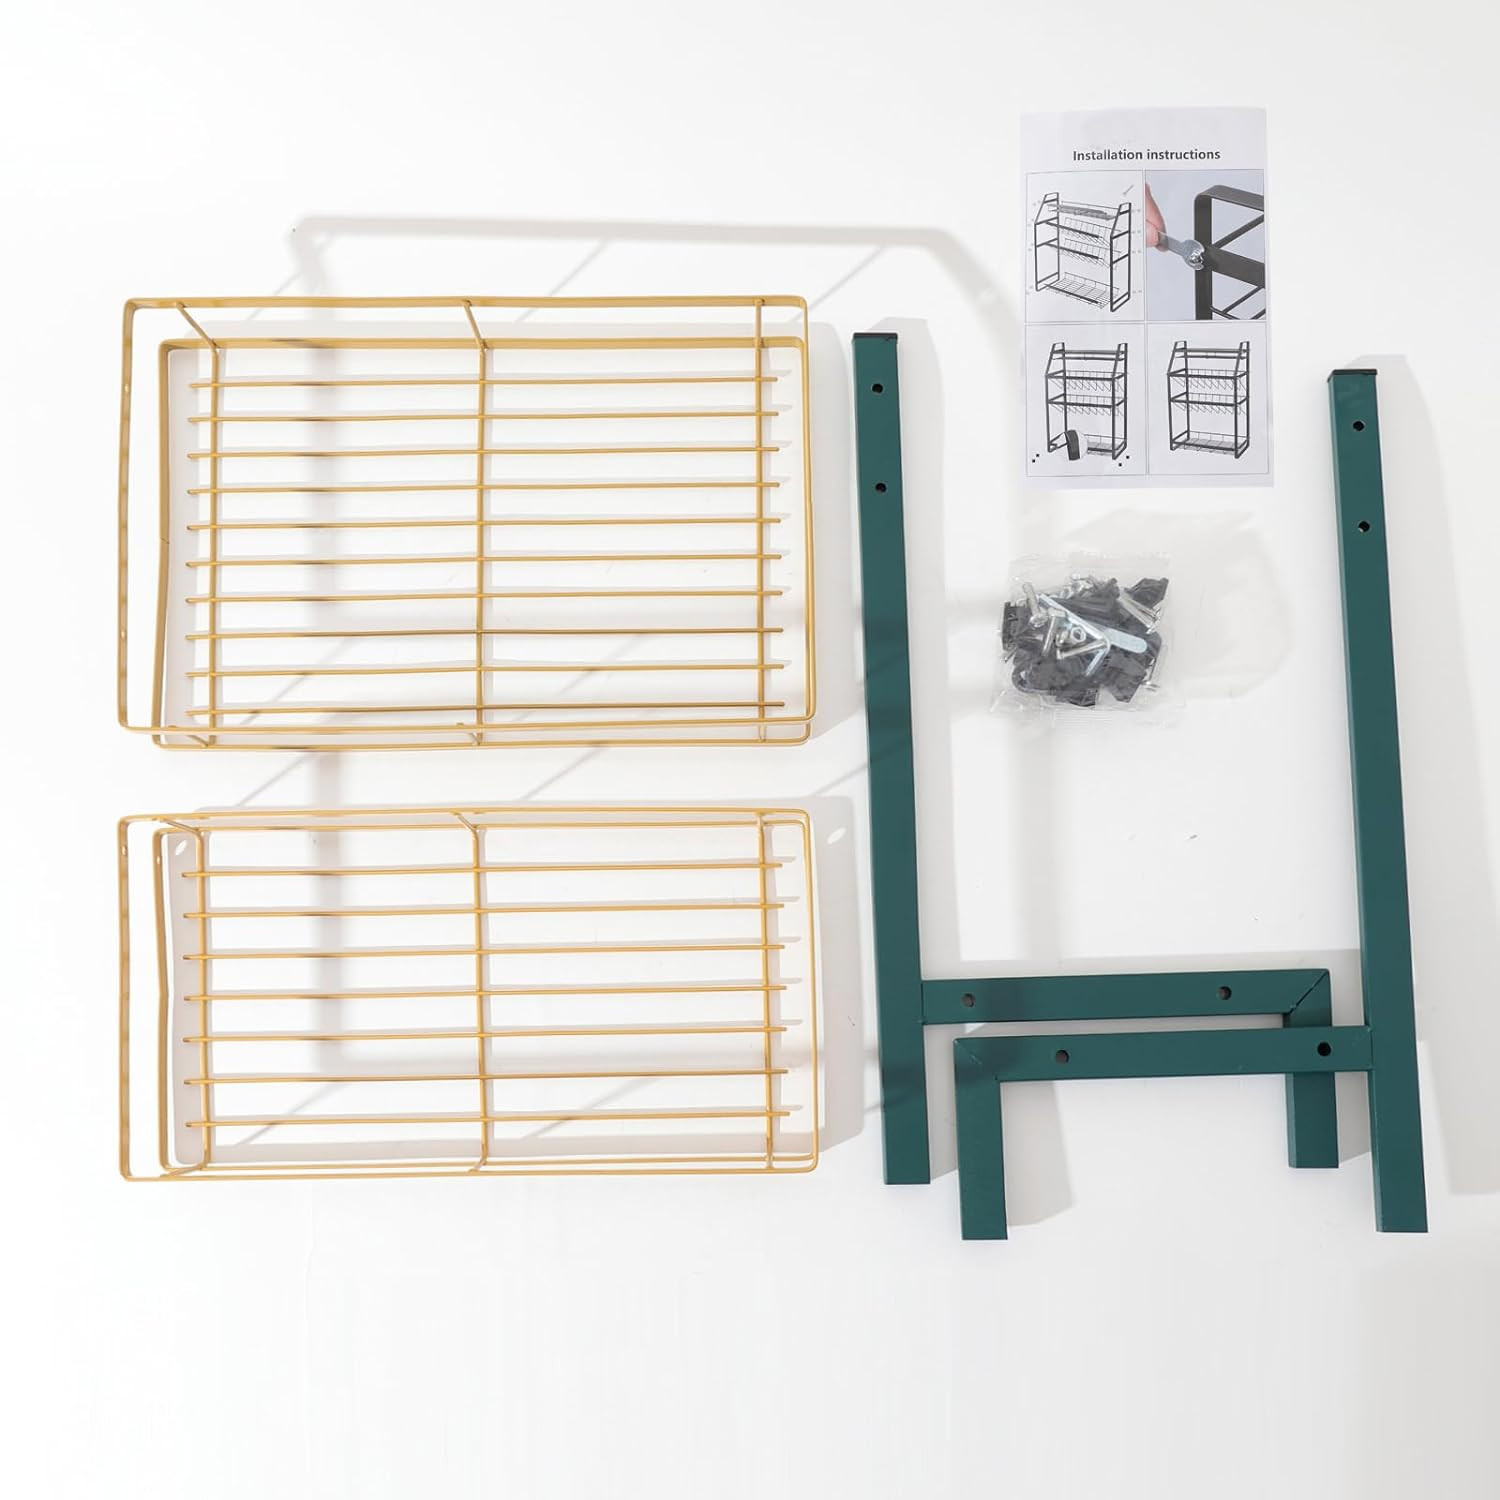 Kuber Industries 2-Layer Dish Drying Rack|Storage Rack for Kitchen Counter|Drainboard & Cutting Board Holder|Premium Utensils Basket (Green & Gold)